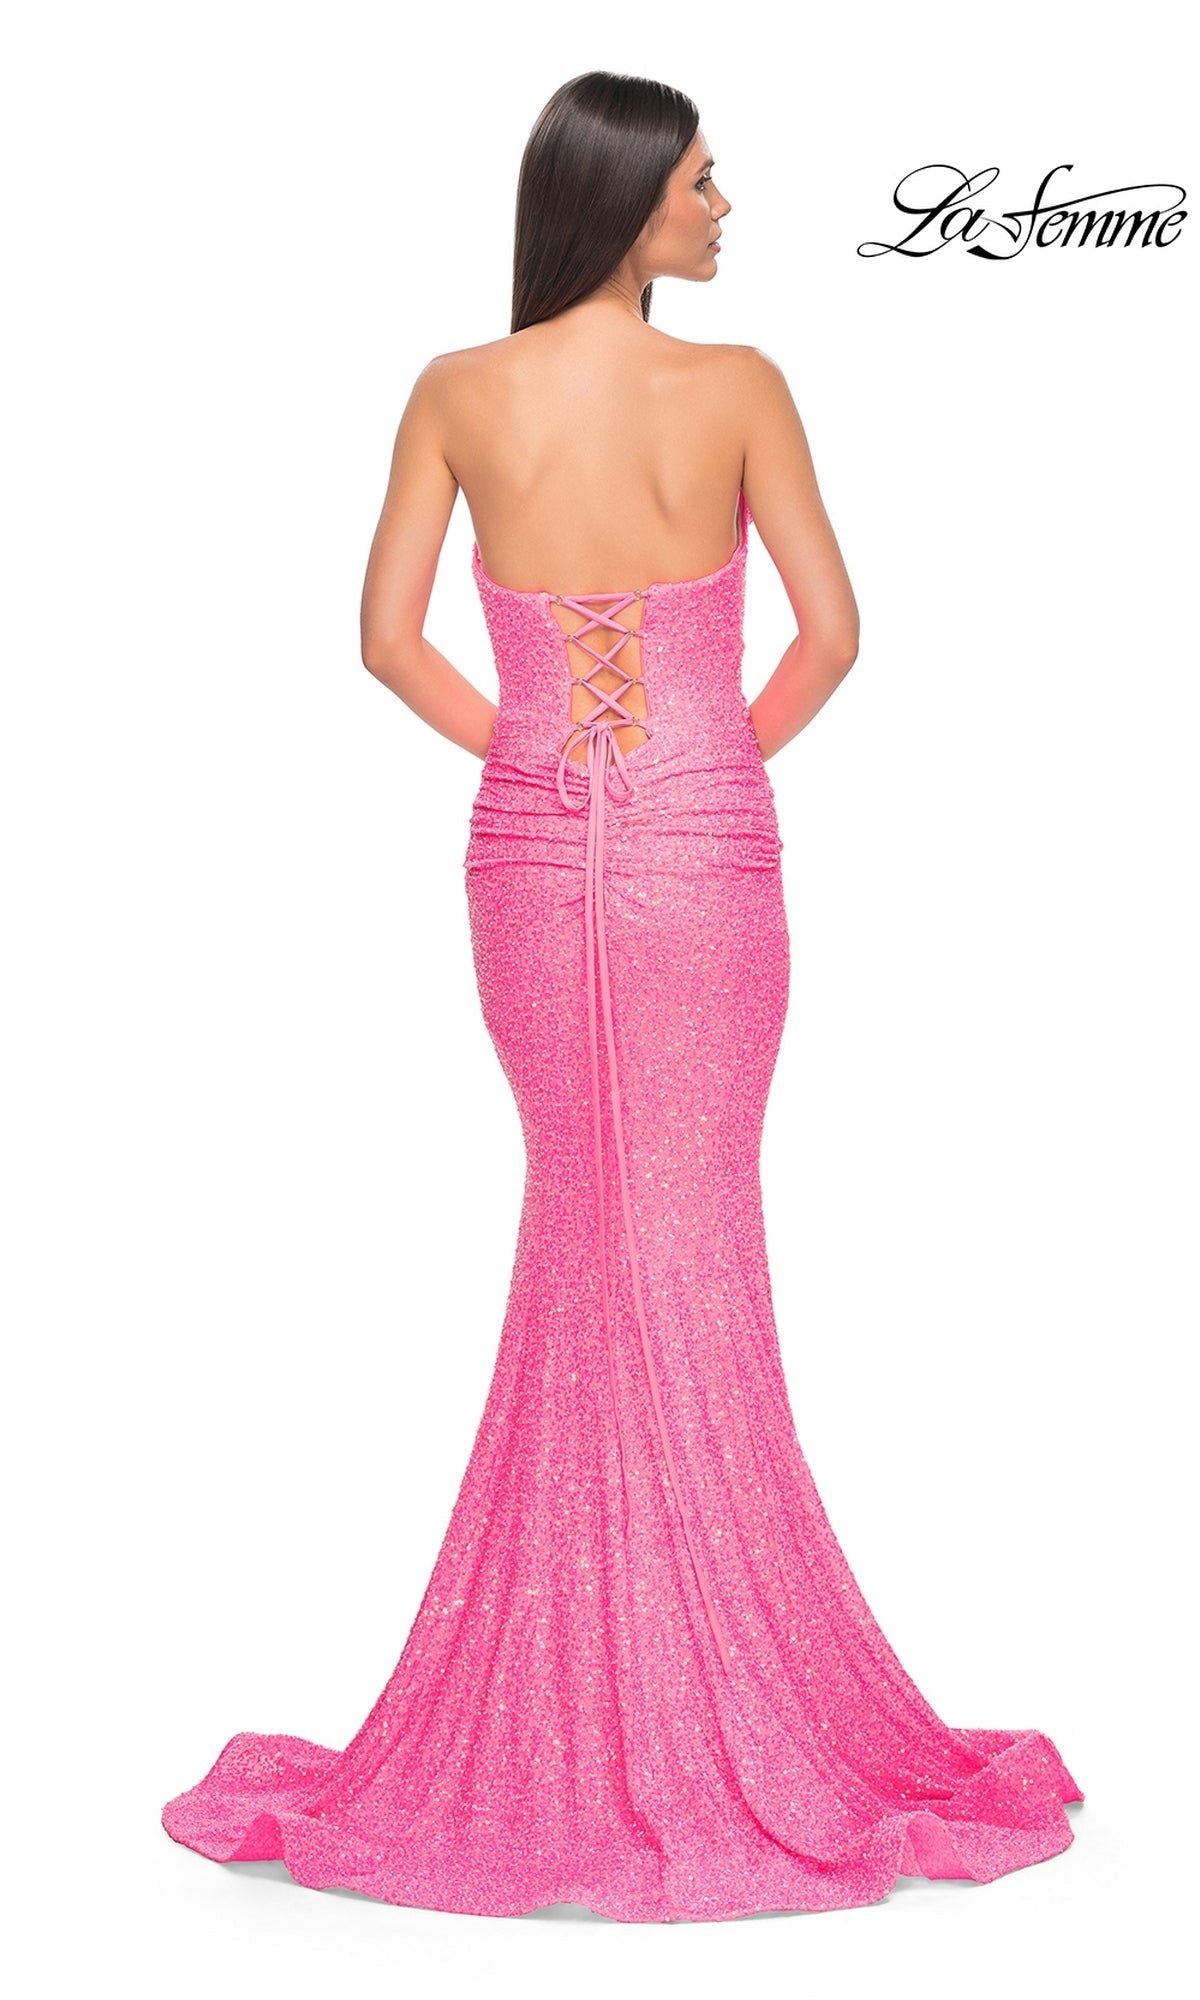  La Femme 32092 Formal Prom Dress